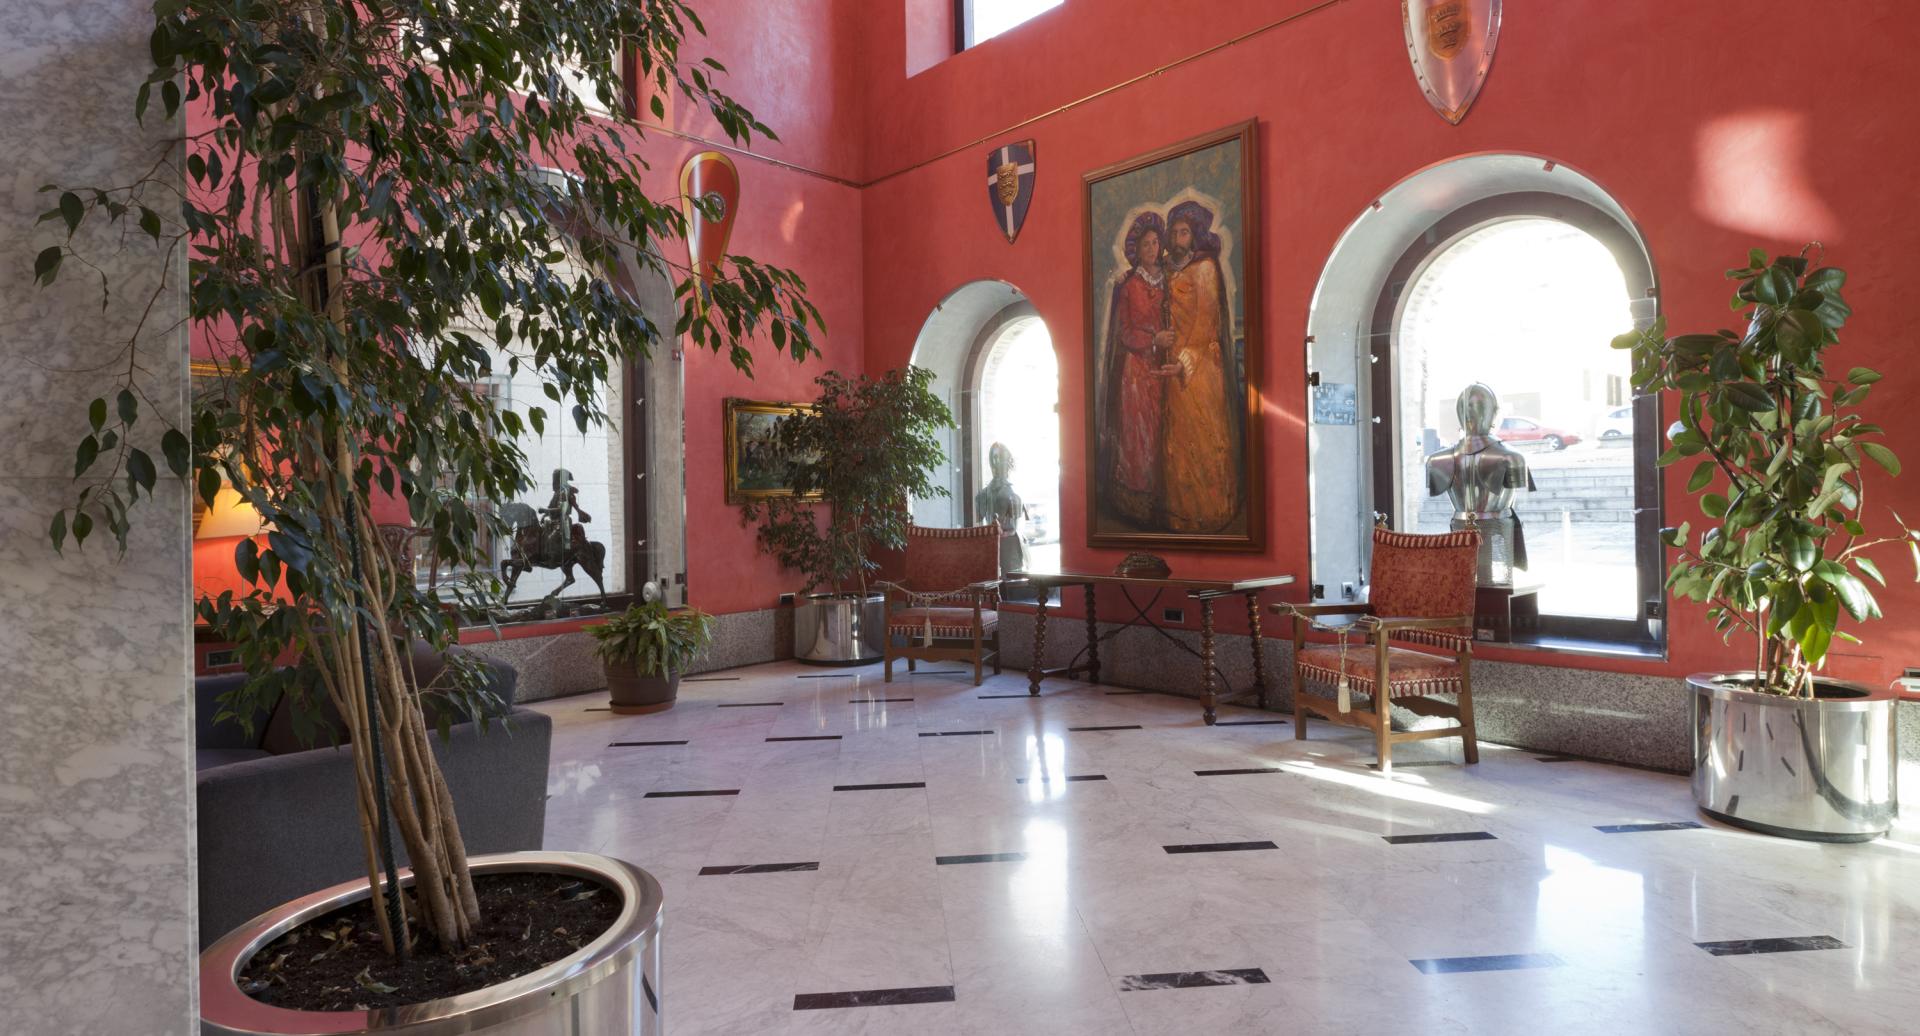 Fotogalerie des Hotel San Juan de los Reyes